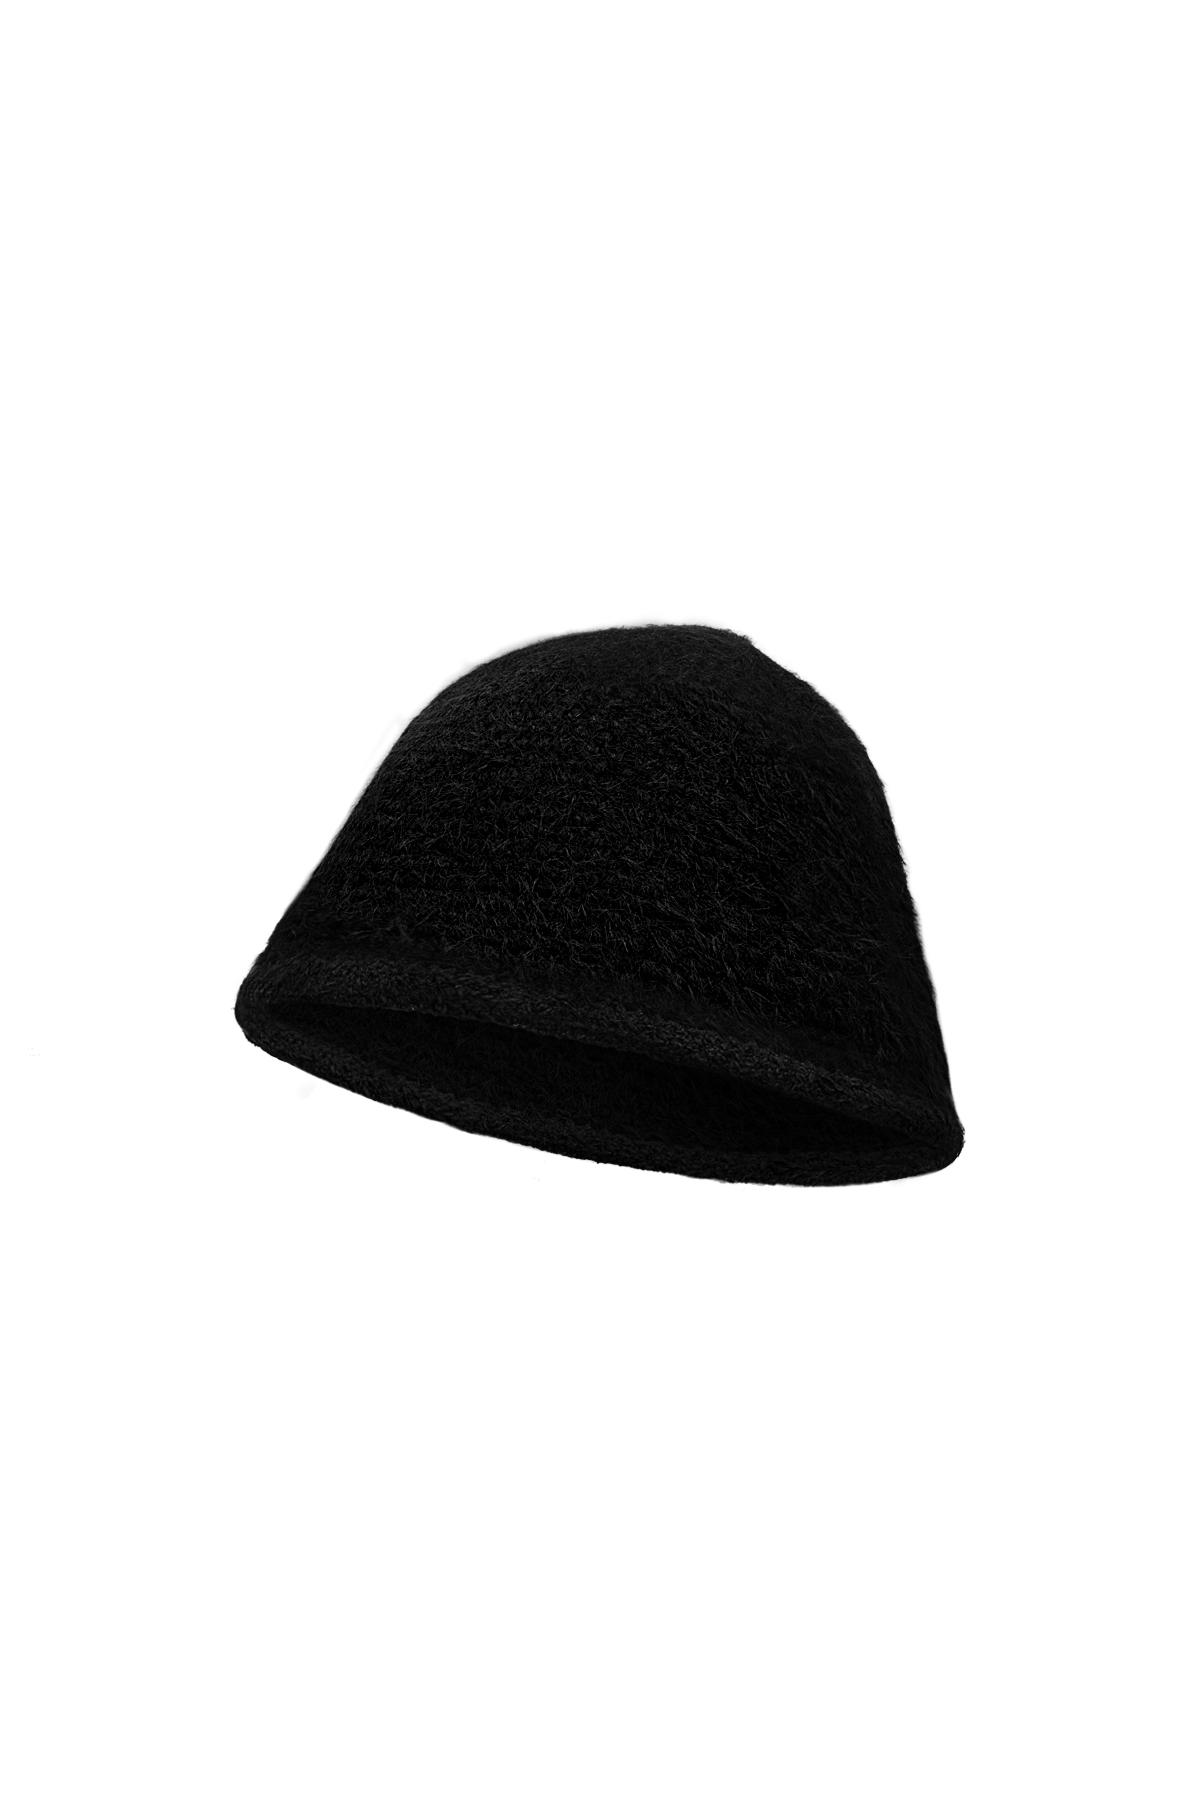 Fisherman's hat basic Black Polyester